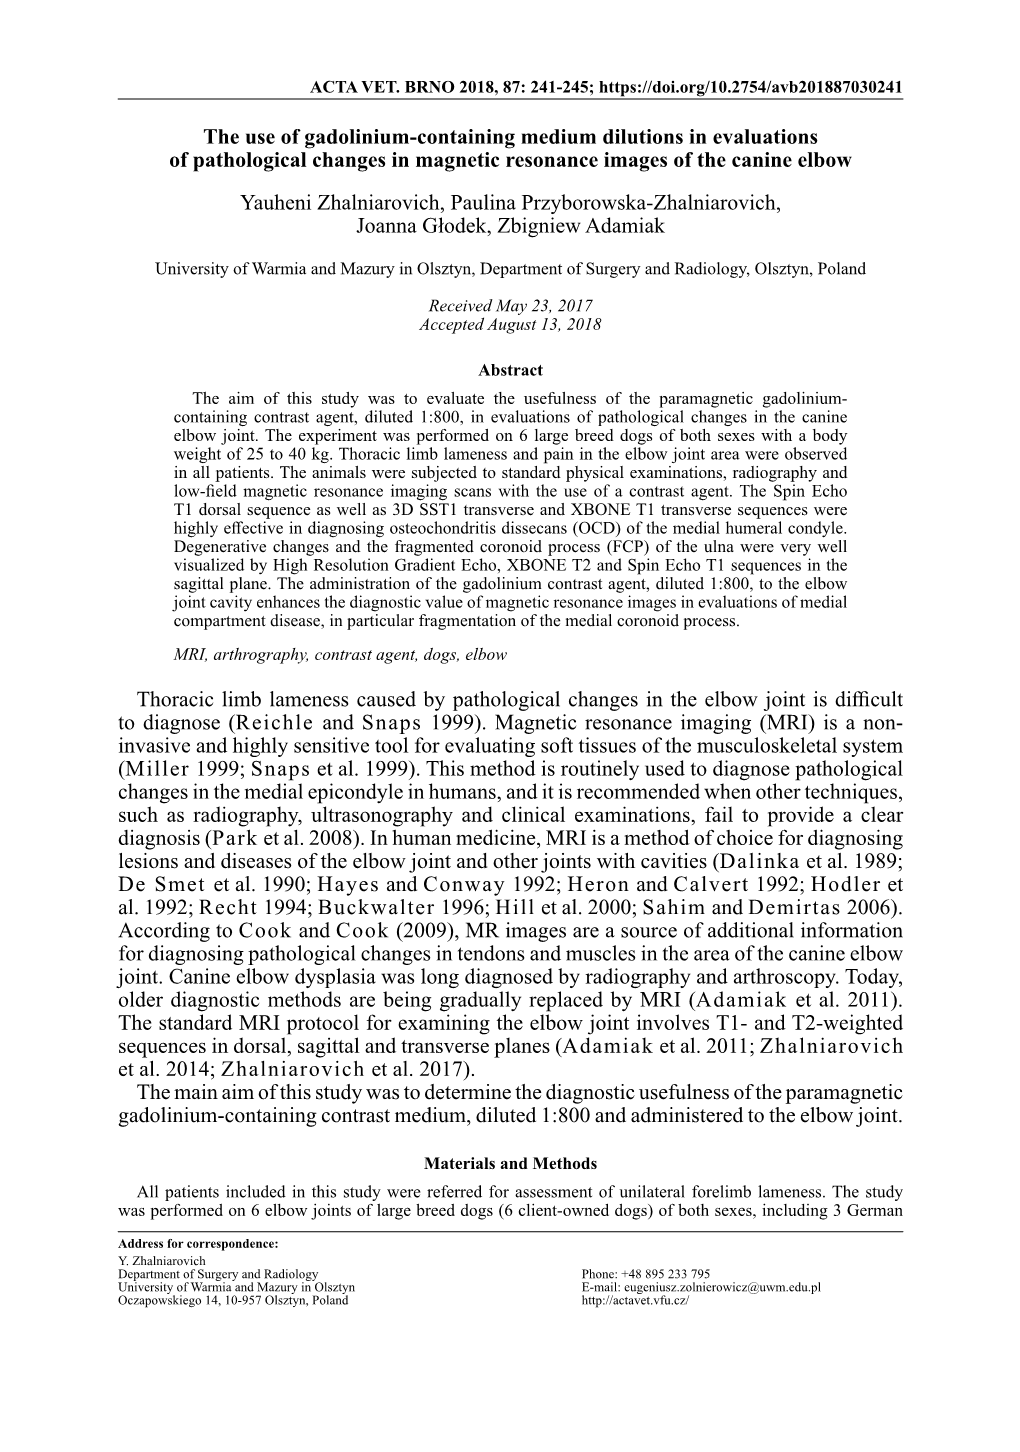 The Use of Gadolinium-Containing Medium Dilutions in Evaluations Of